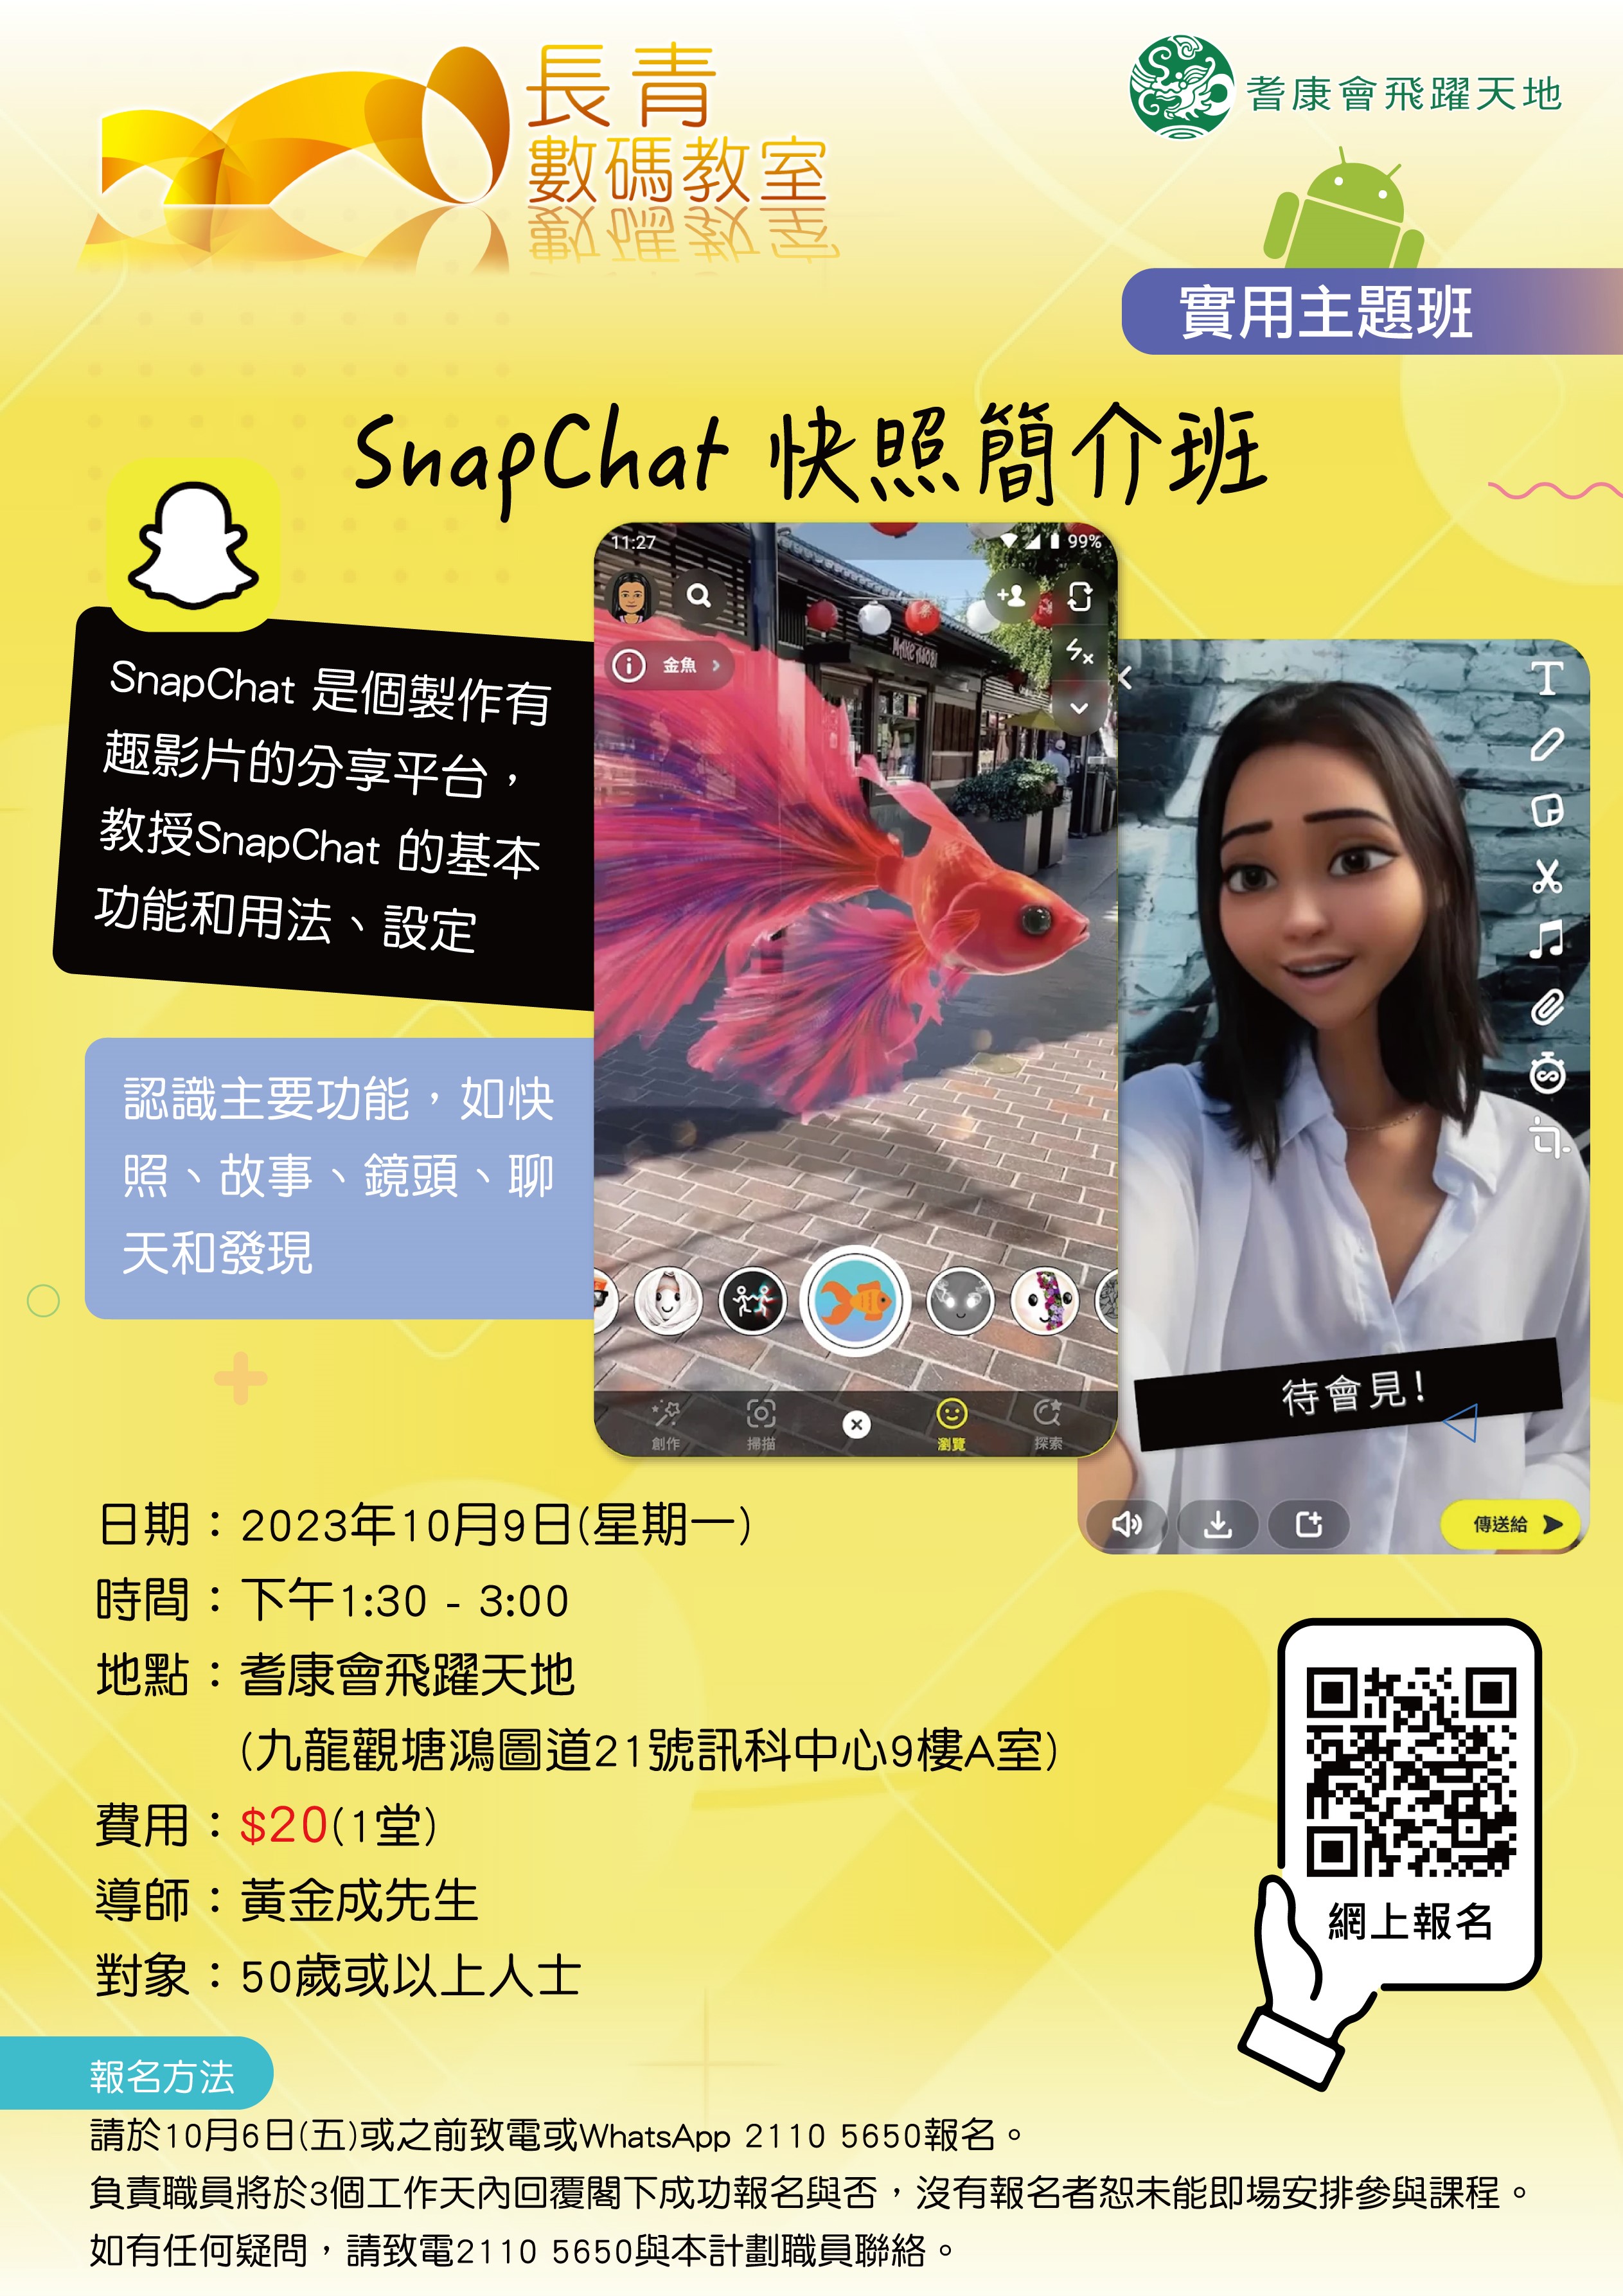 SnapChat-快照簡介班